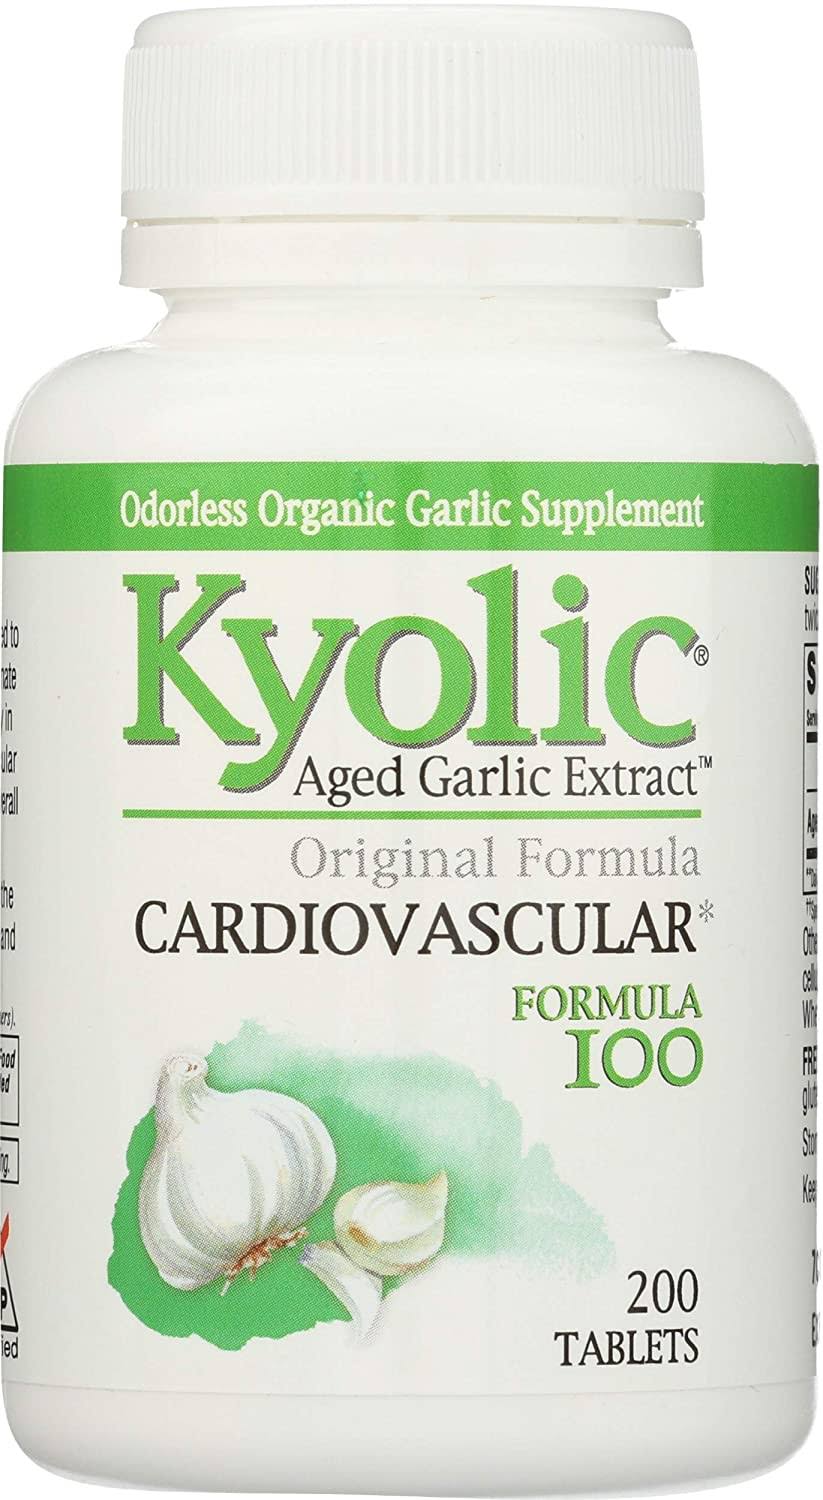 Kyolic Garlic Extract - 200 Tablets